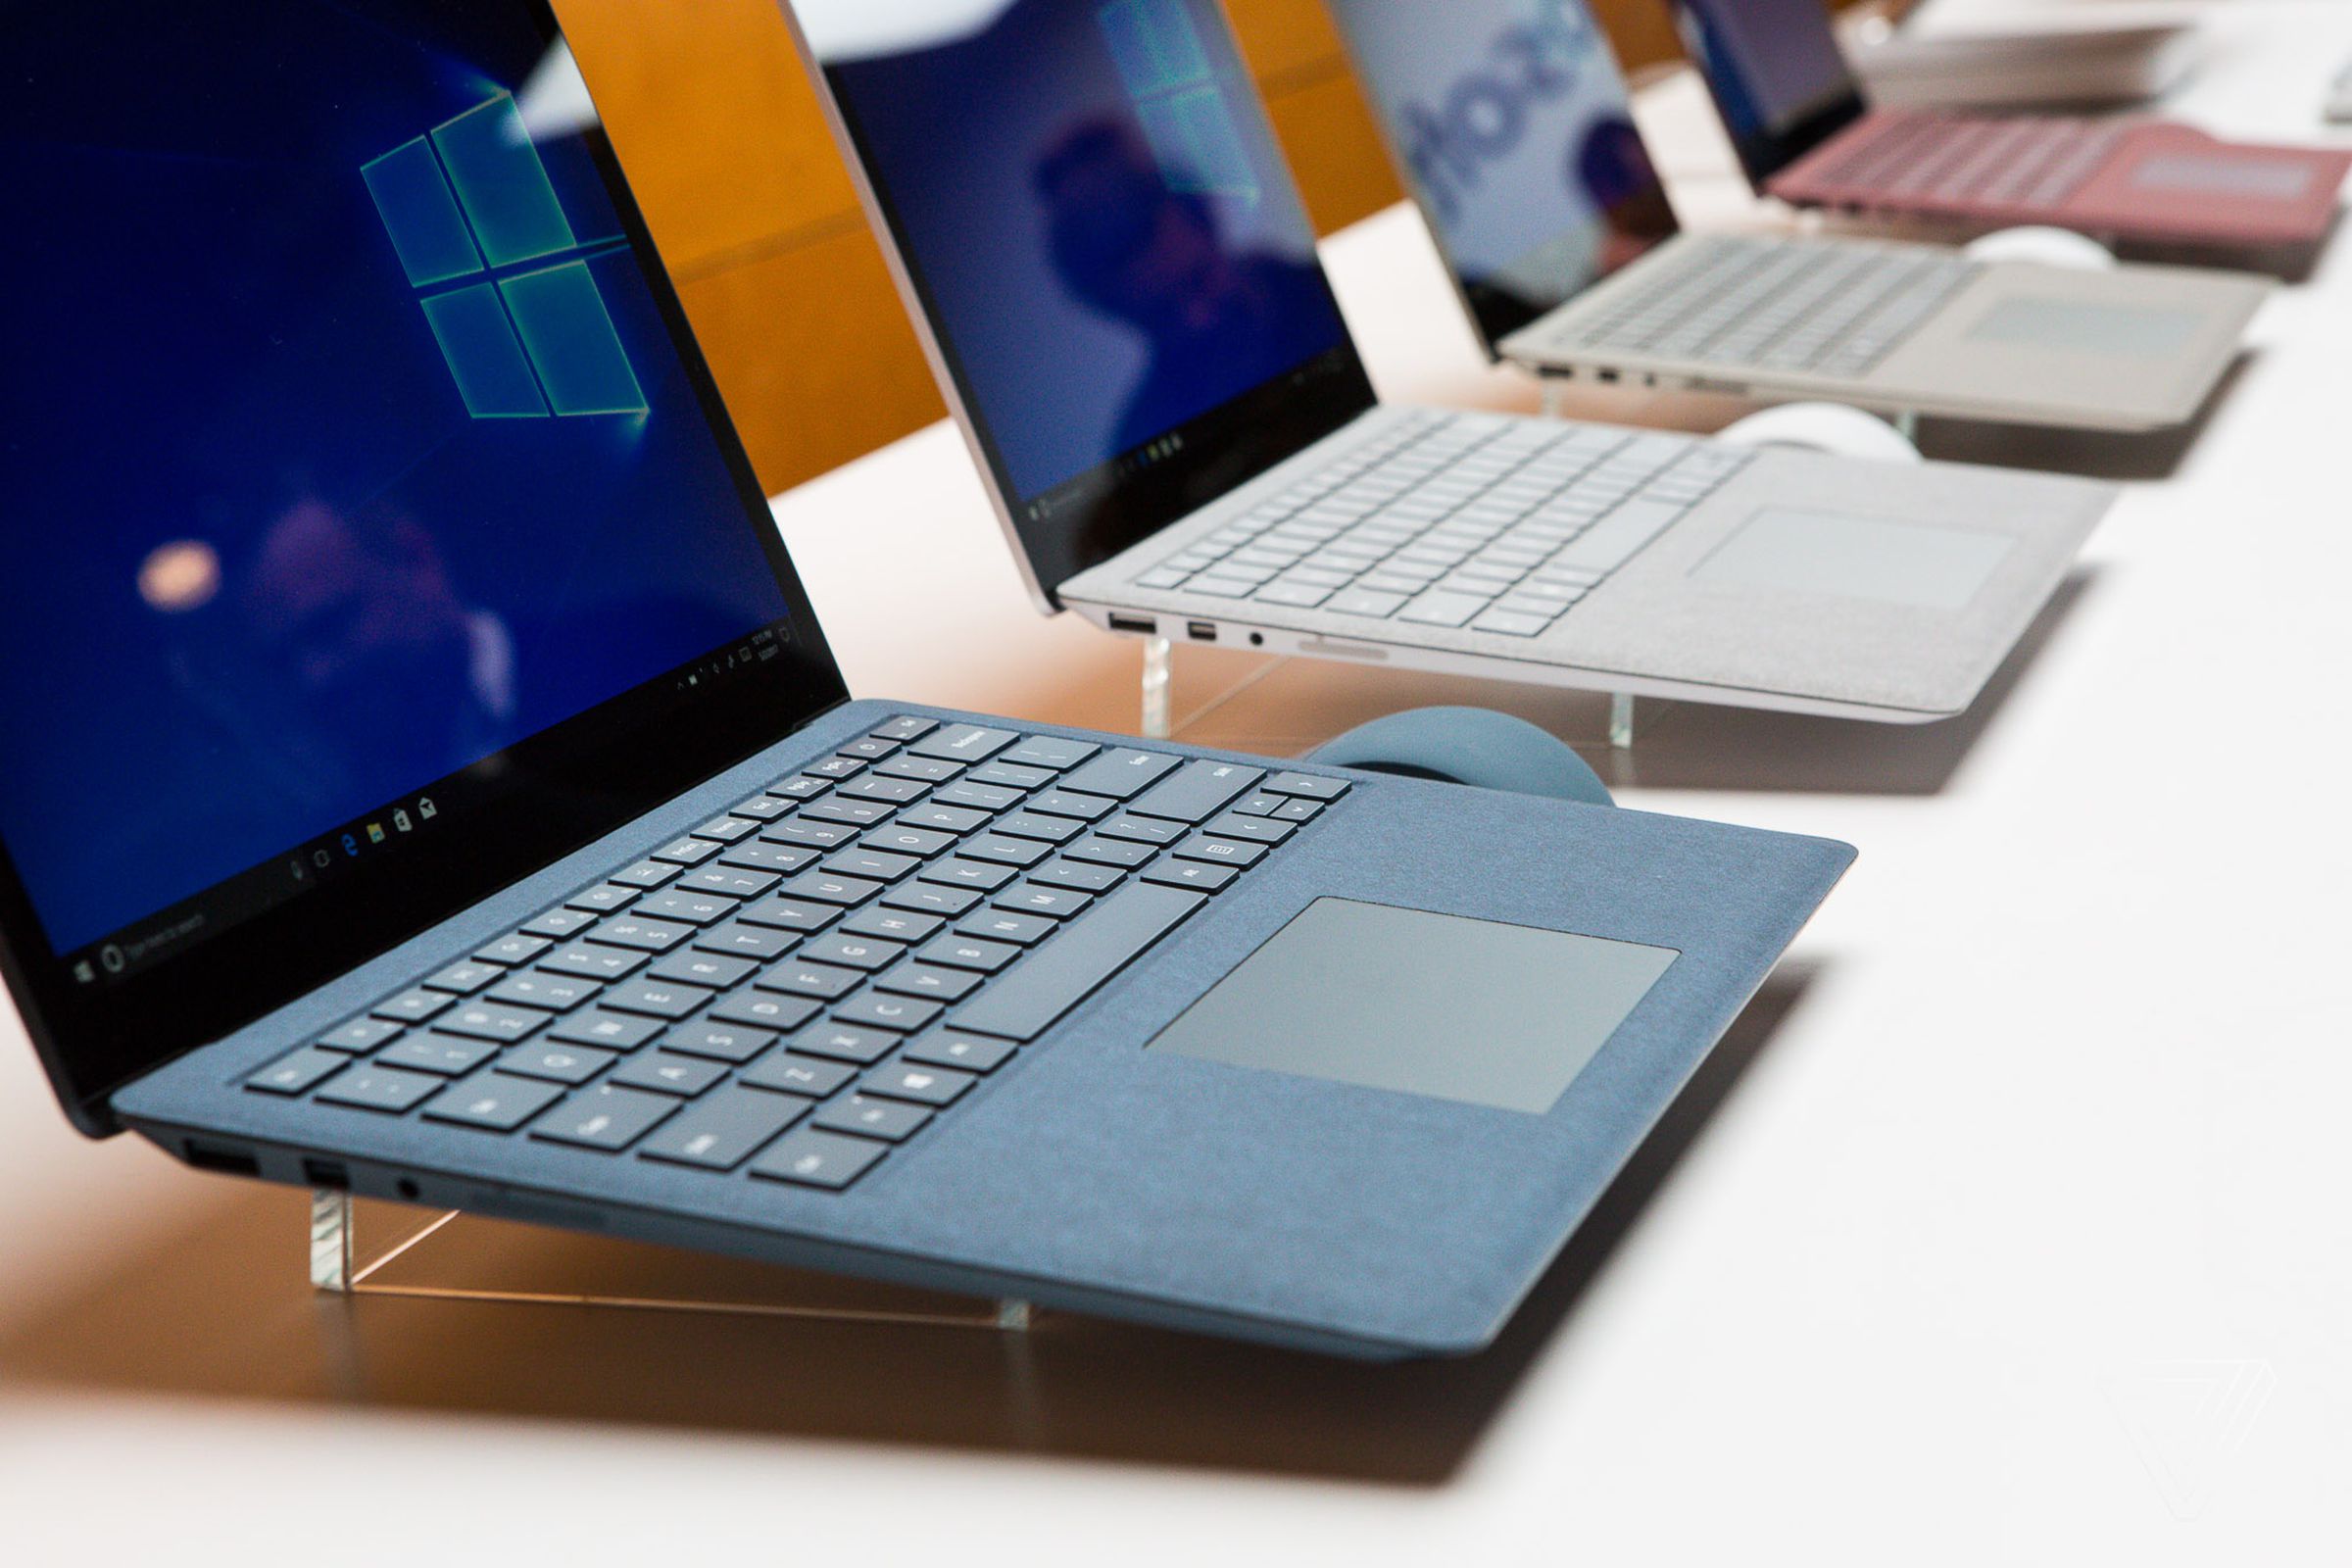 Surface Laptop running Windows 10 S